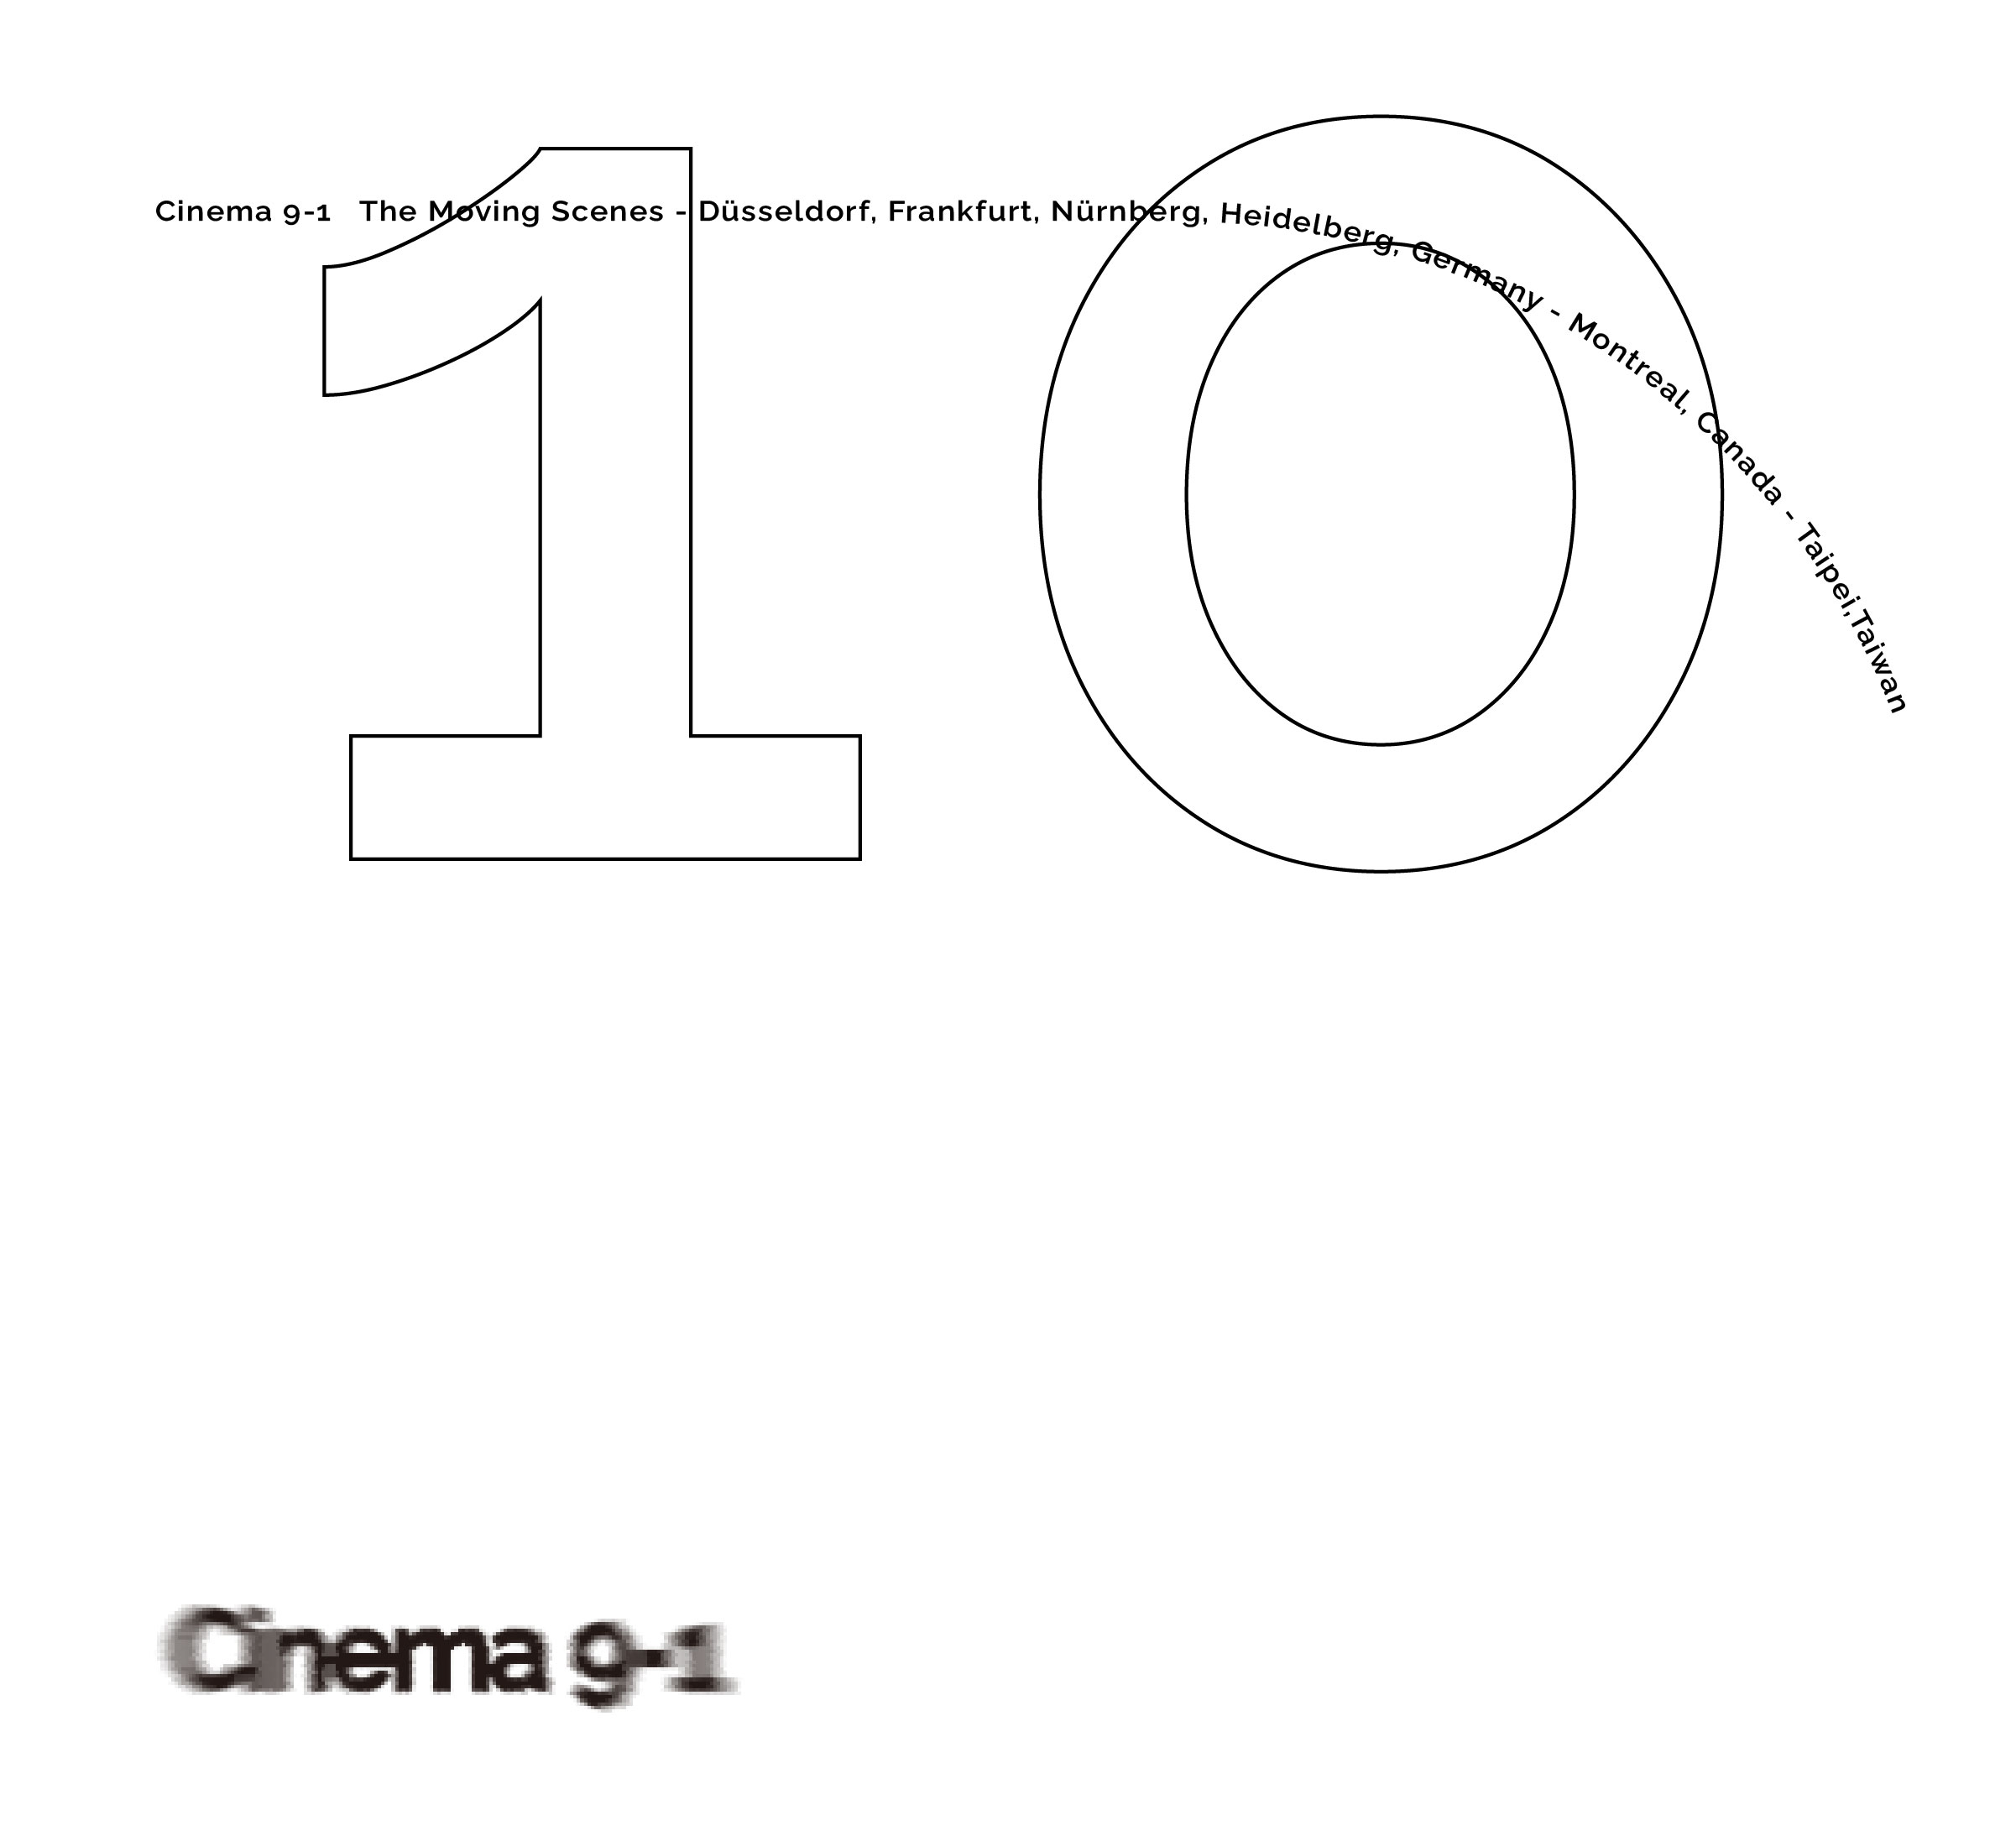 Exhibition 'Cinema 9-1' poster, Countdown day 10.